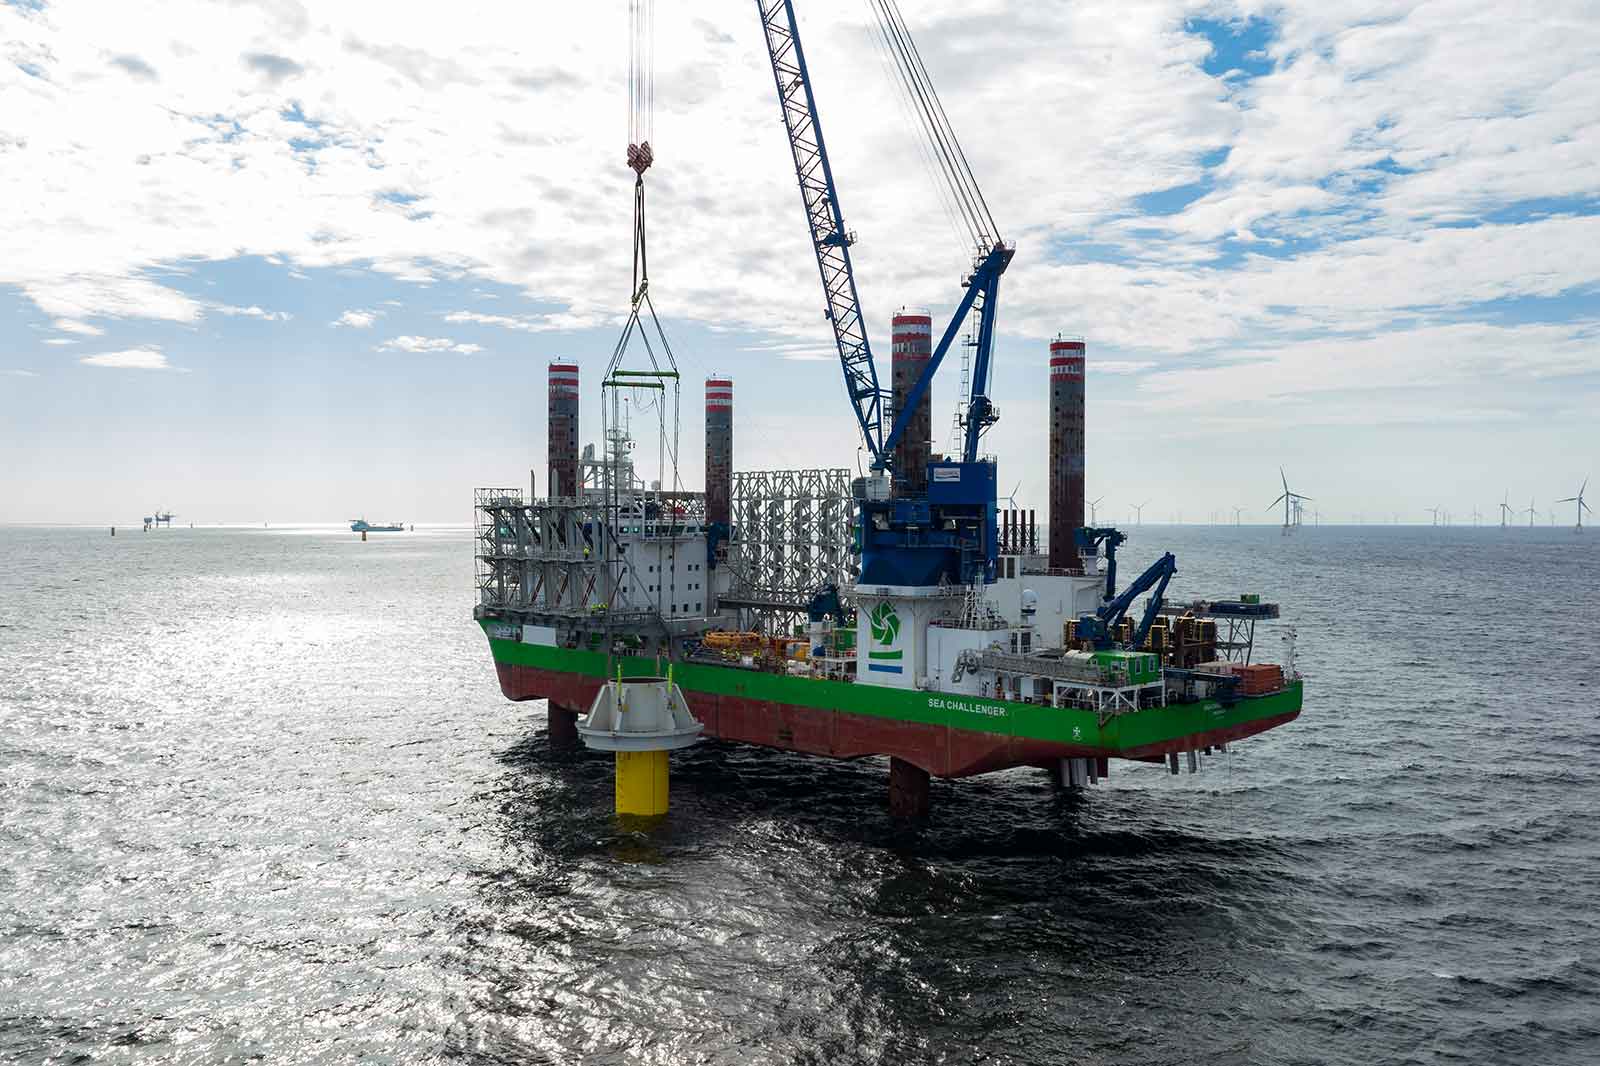 World’s first: Innovative steel collars installed at RWE’s Kaskasi wind farm in the German North Sea